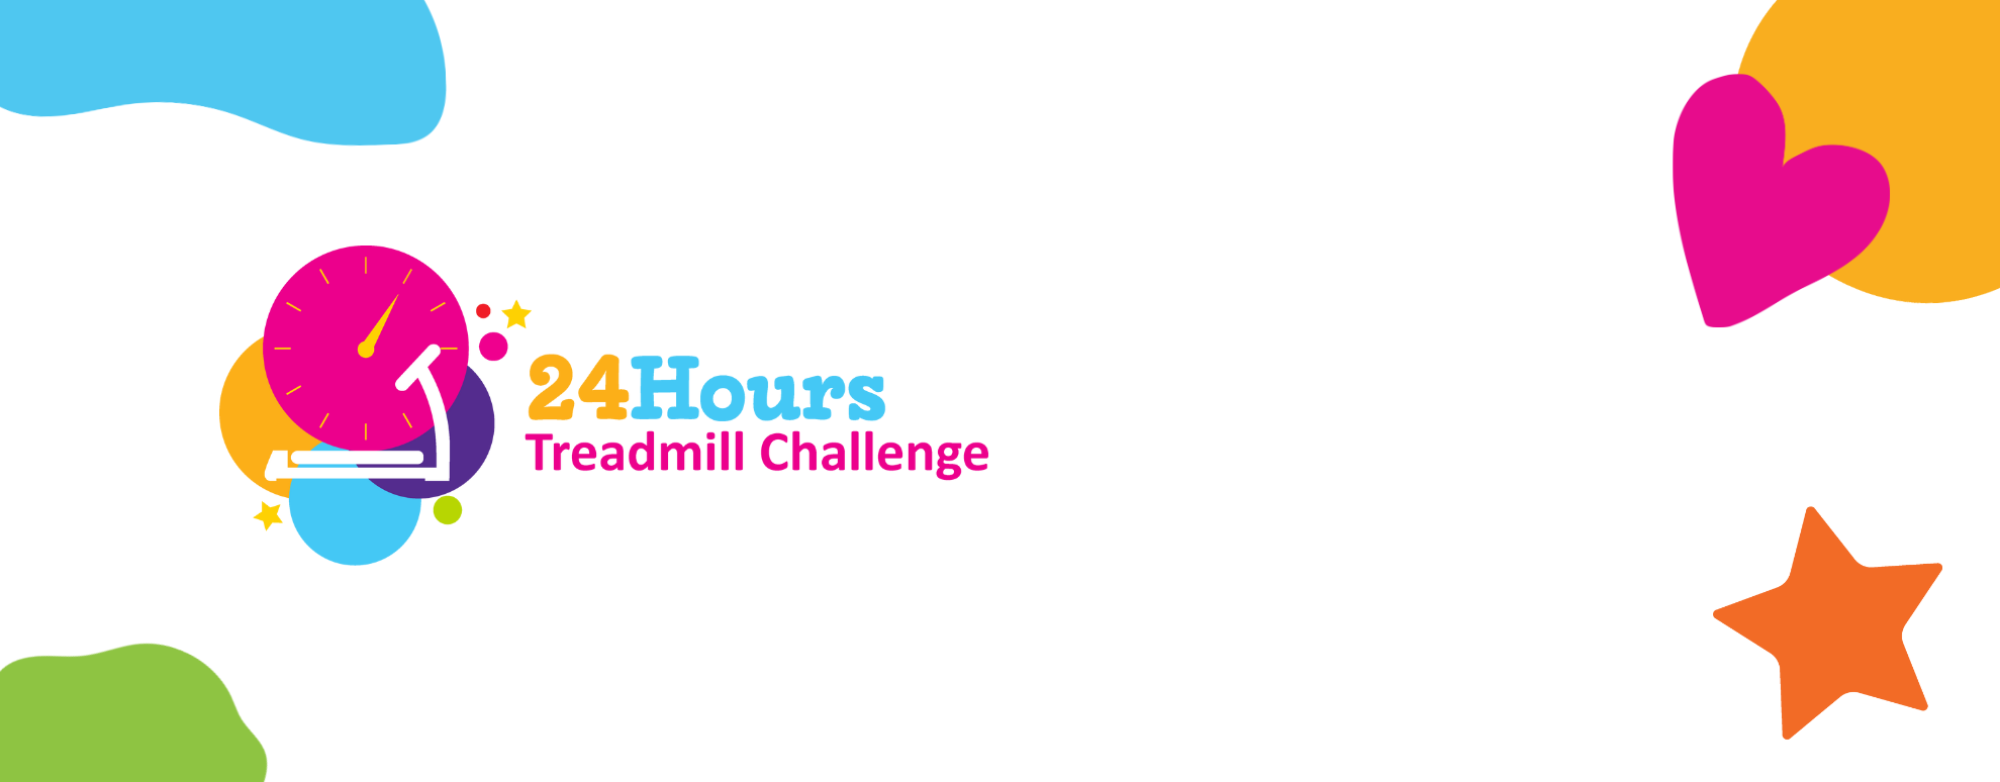 24 Hours Treadmill Challenge  